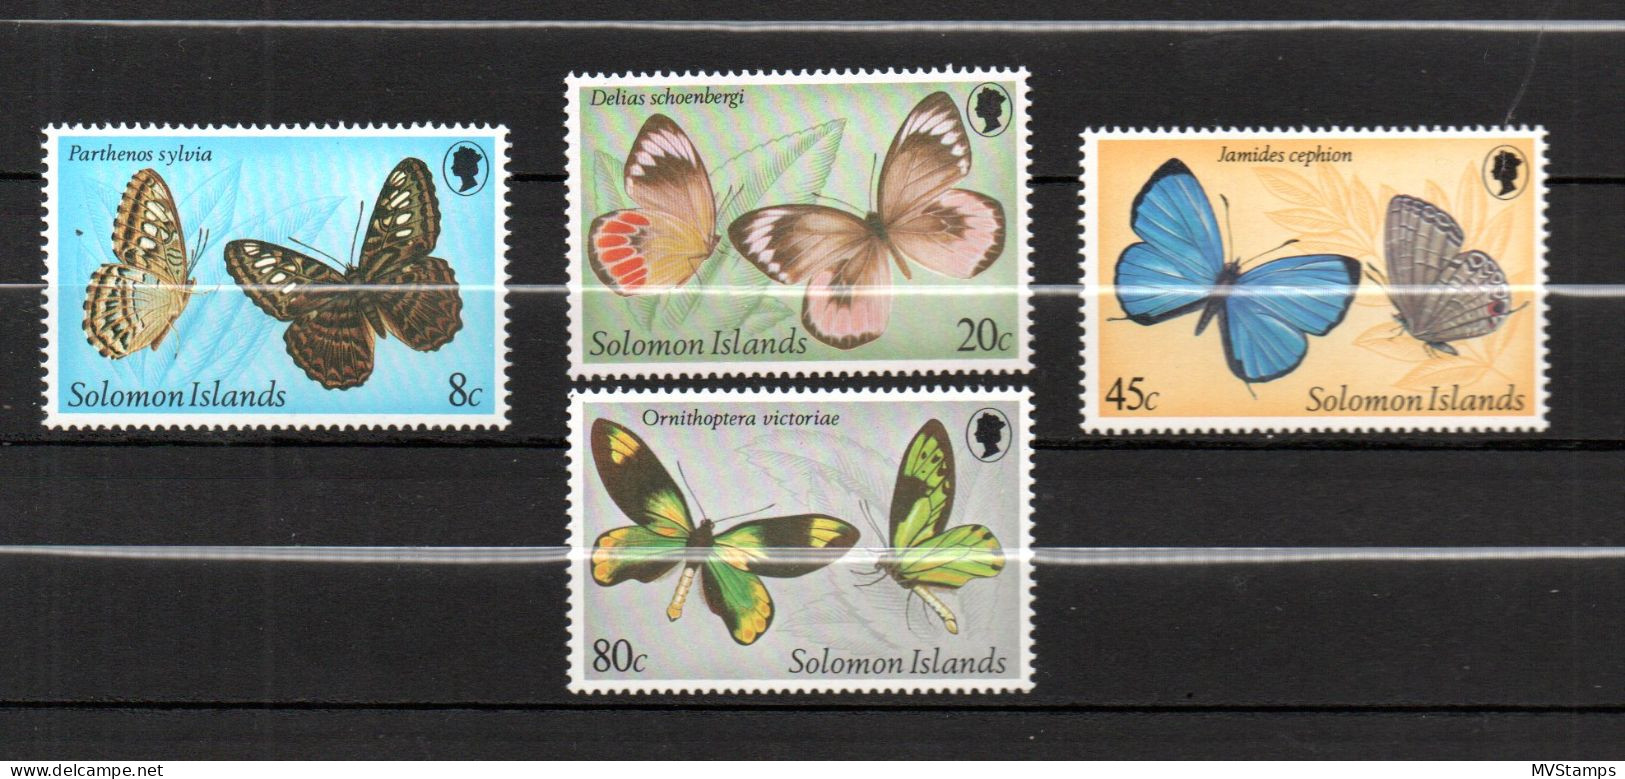 Solomon Islands 19980 Set Butterflies/Schmetterlinge Stamps (Michel 422/25) MNH - Solomon Islands (1978-...)